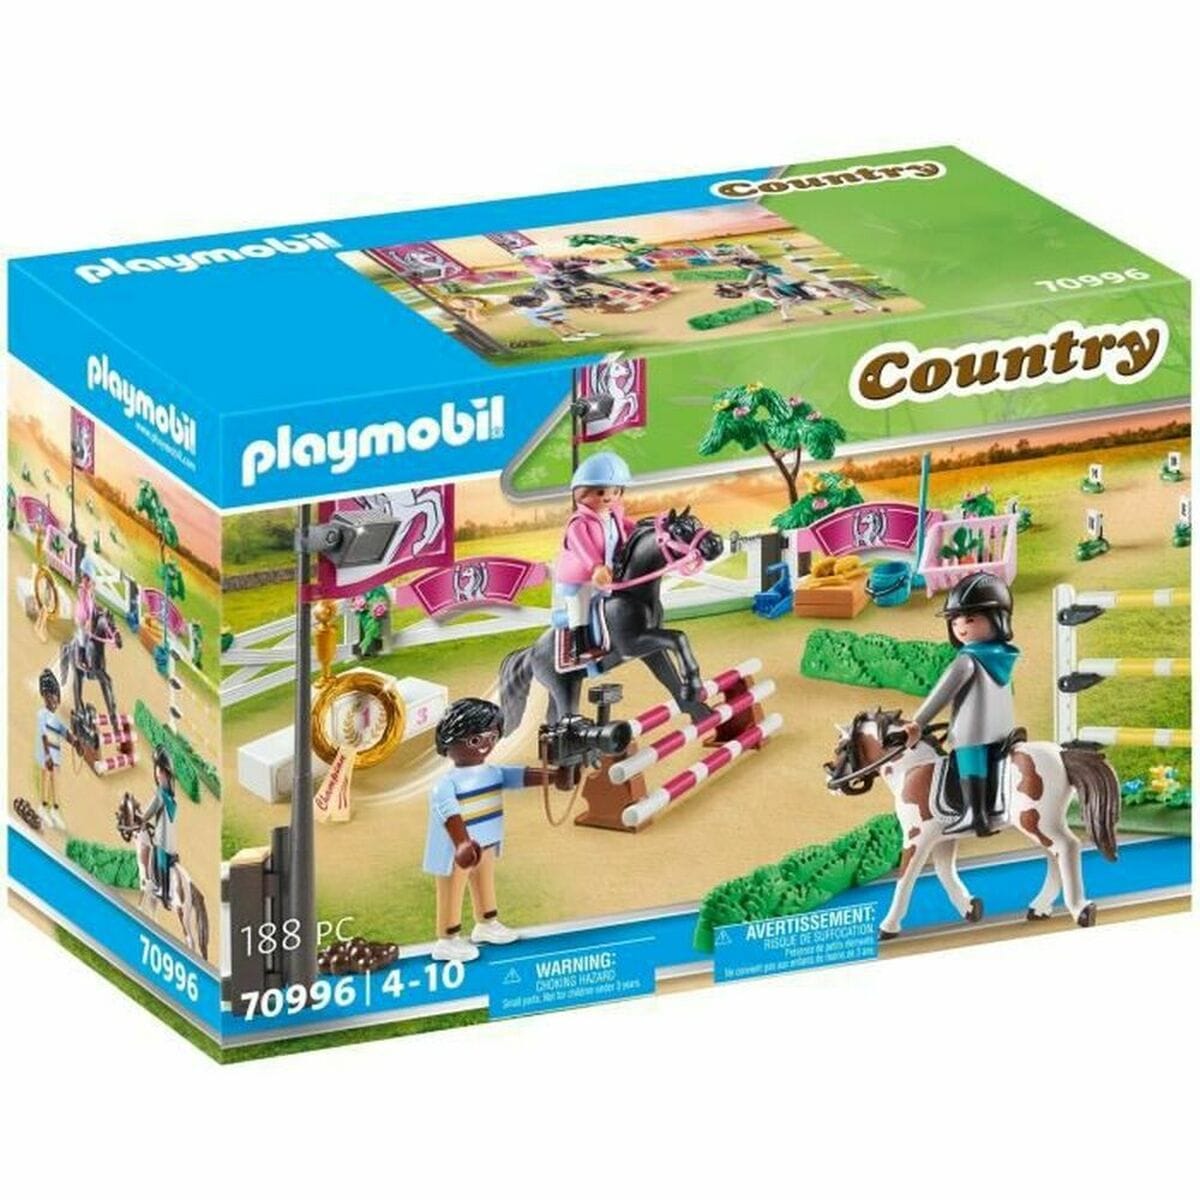 Playmobil Spielzeug | Kostüme > Spielzeug und Spiele > Weiteres spielzeug Playset Playmobil 70996 Country Pferd Laufbahnen